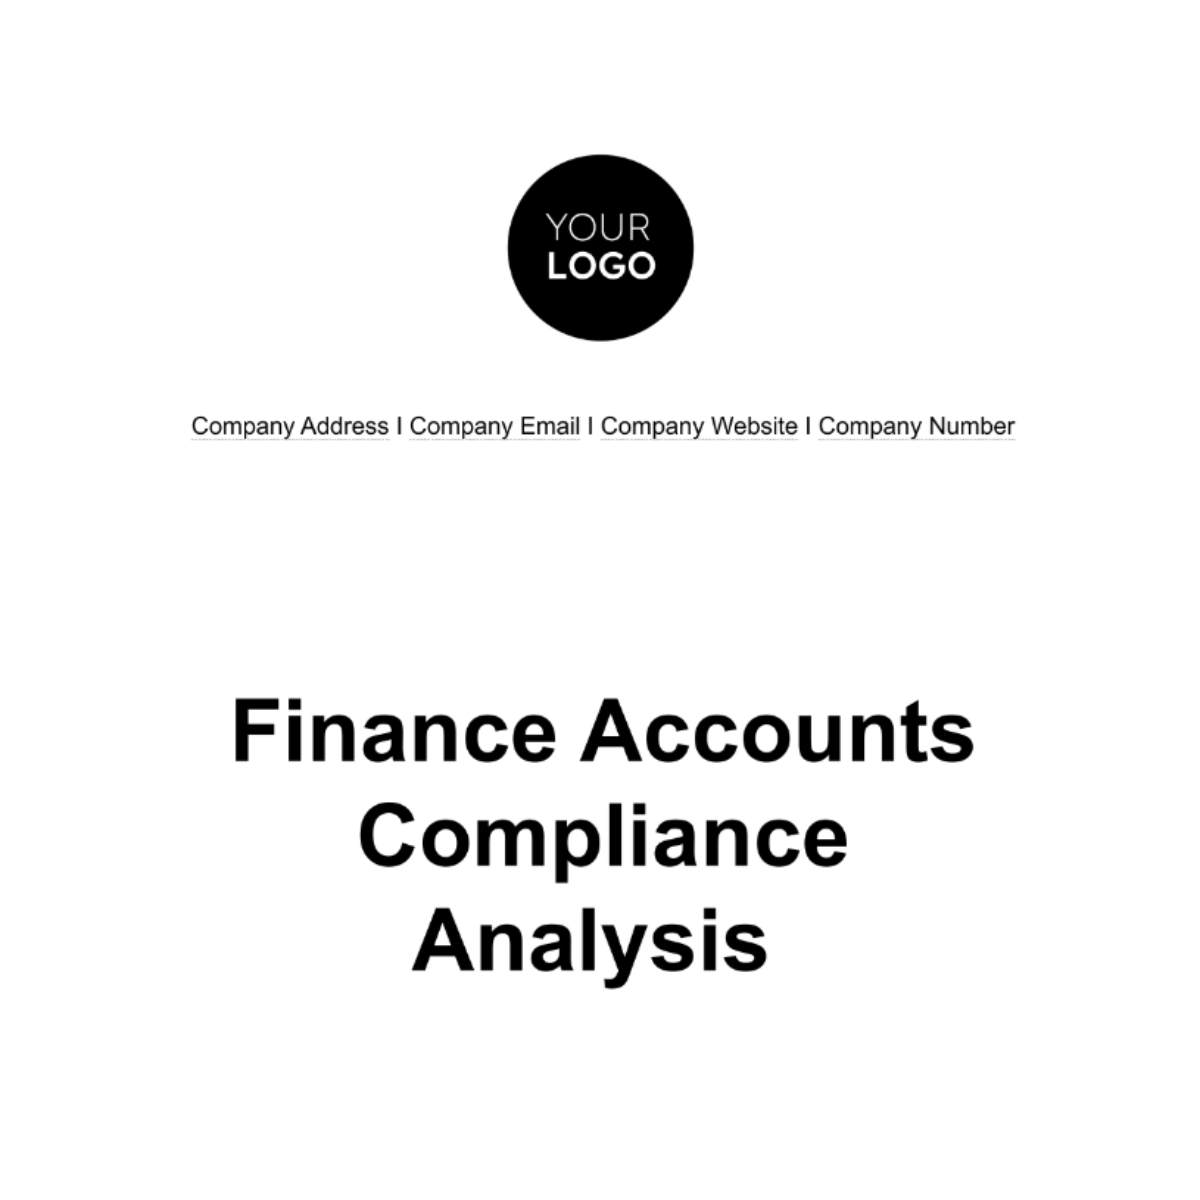 Finance Accounts Compliance Analysis Template